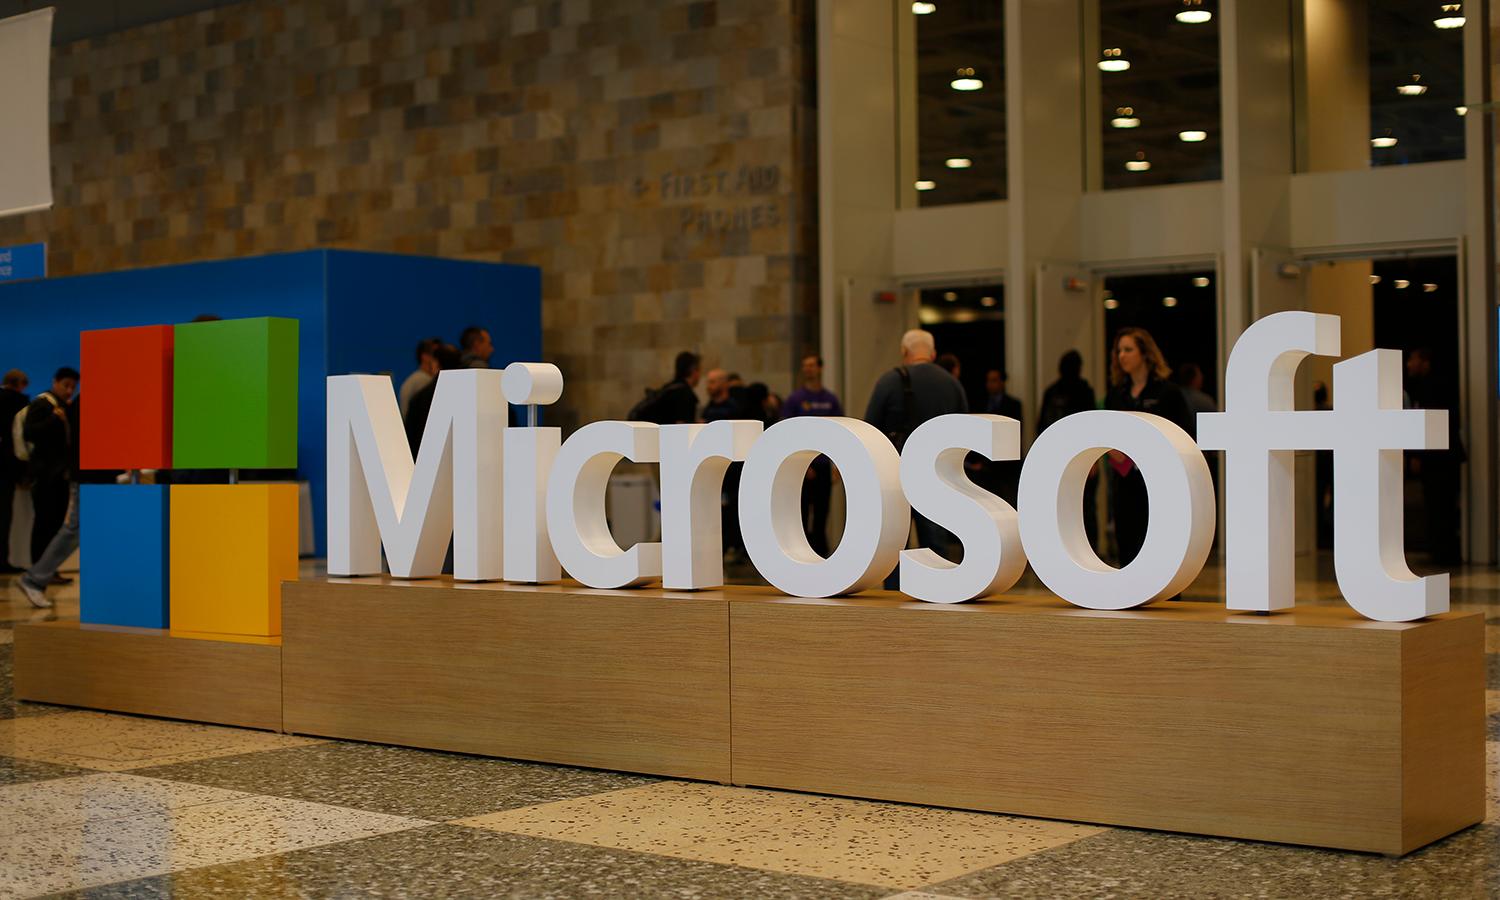 A Microsoft logo is seen